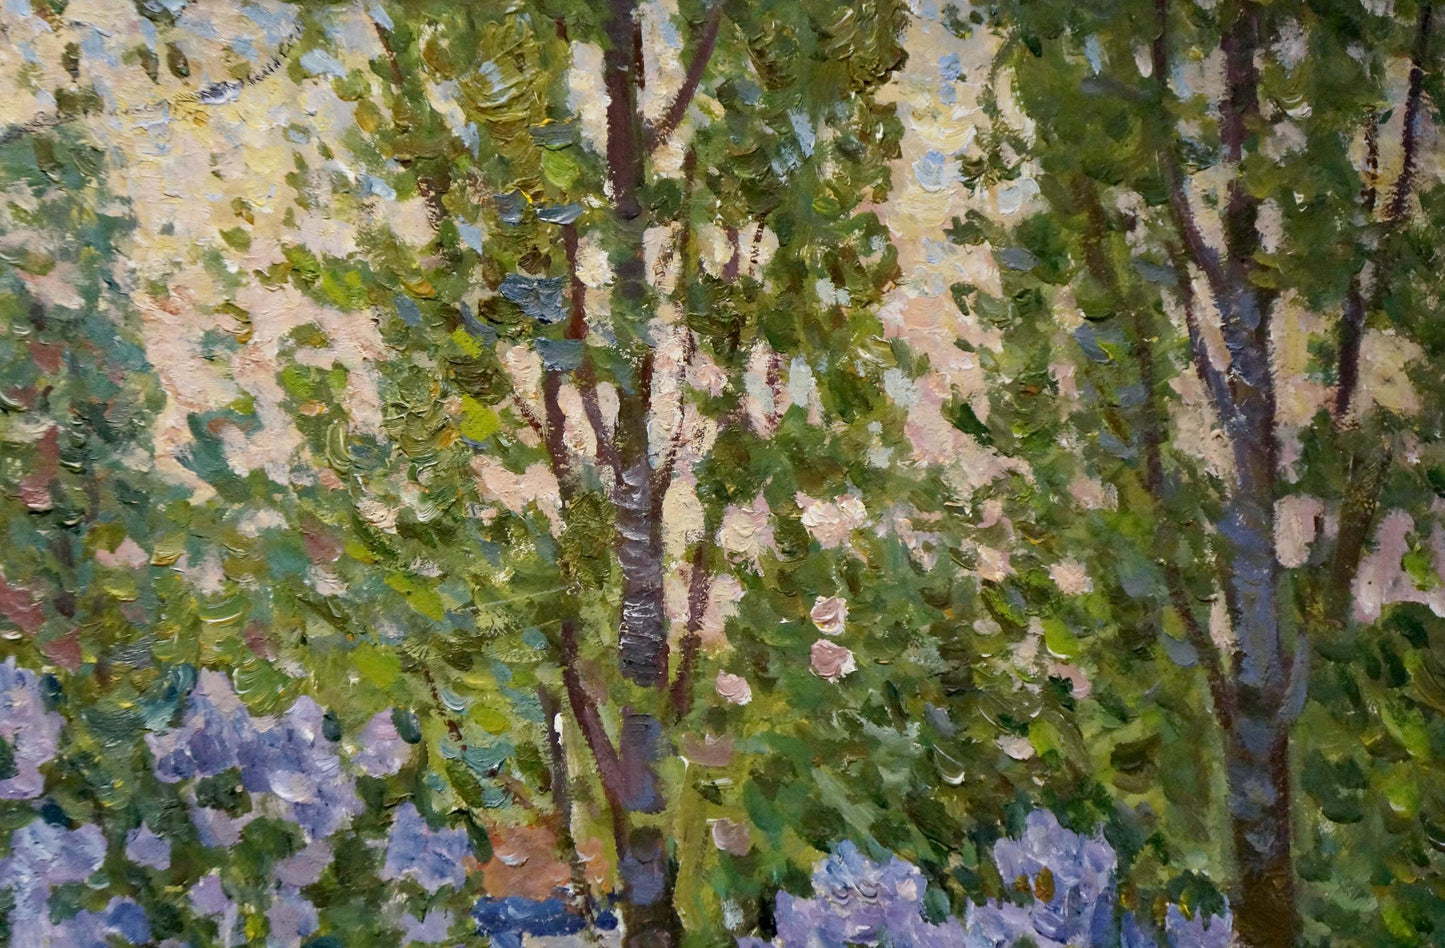 Oil painting Lilac blooms in the garden Konovalov Yuri Alexandrovich